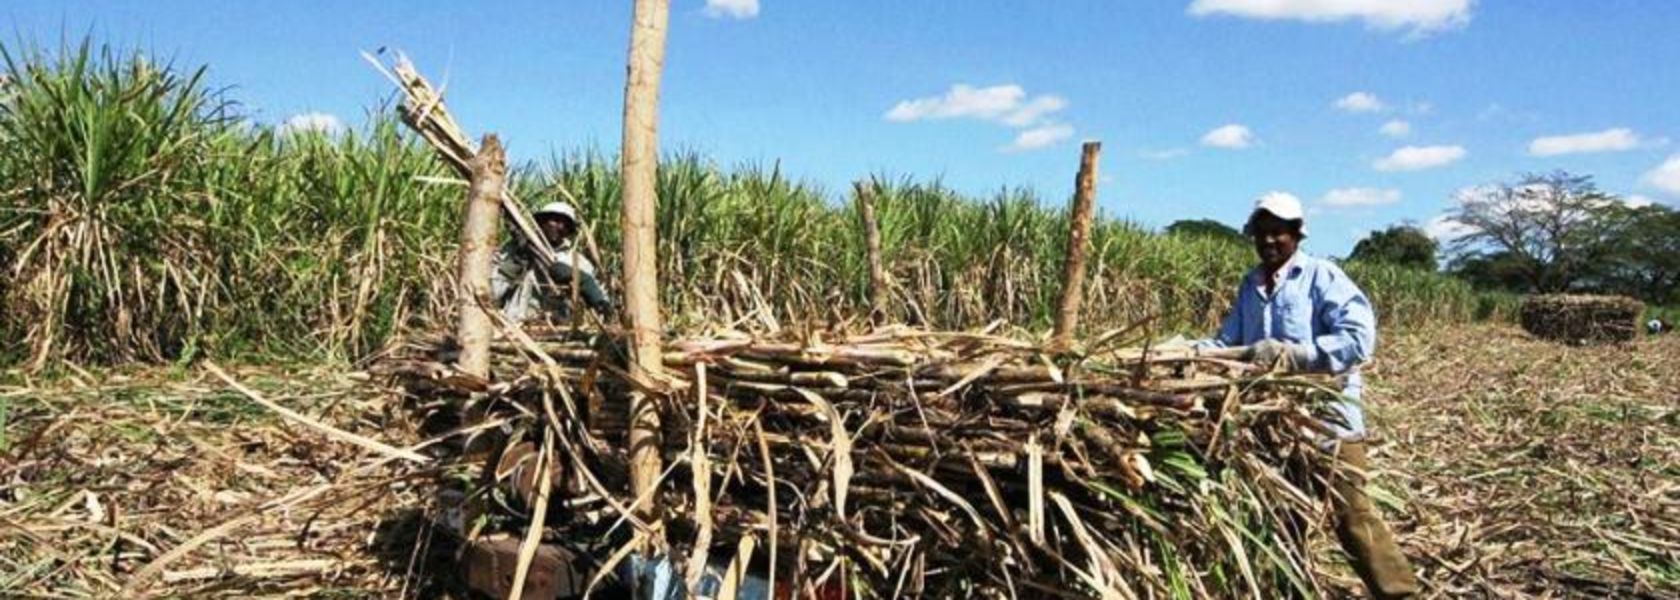 sugarcane-1680x600.jpg